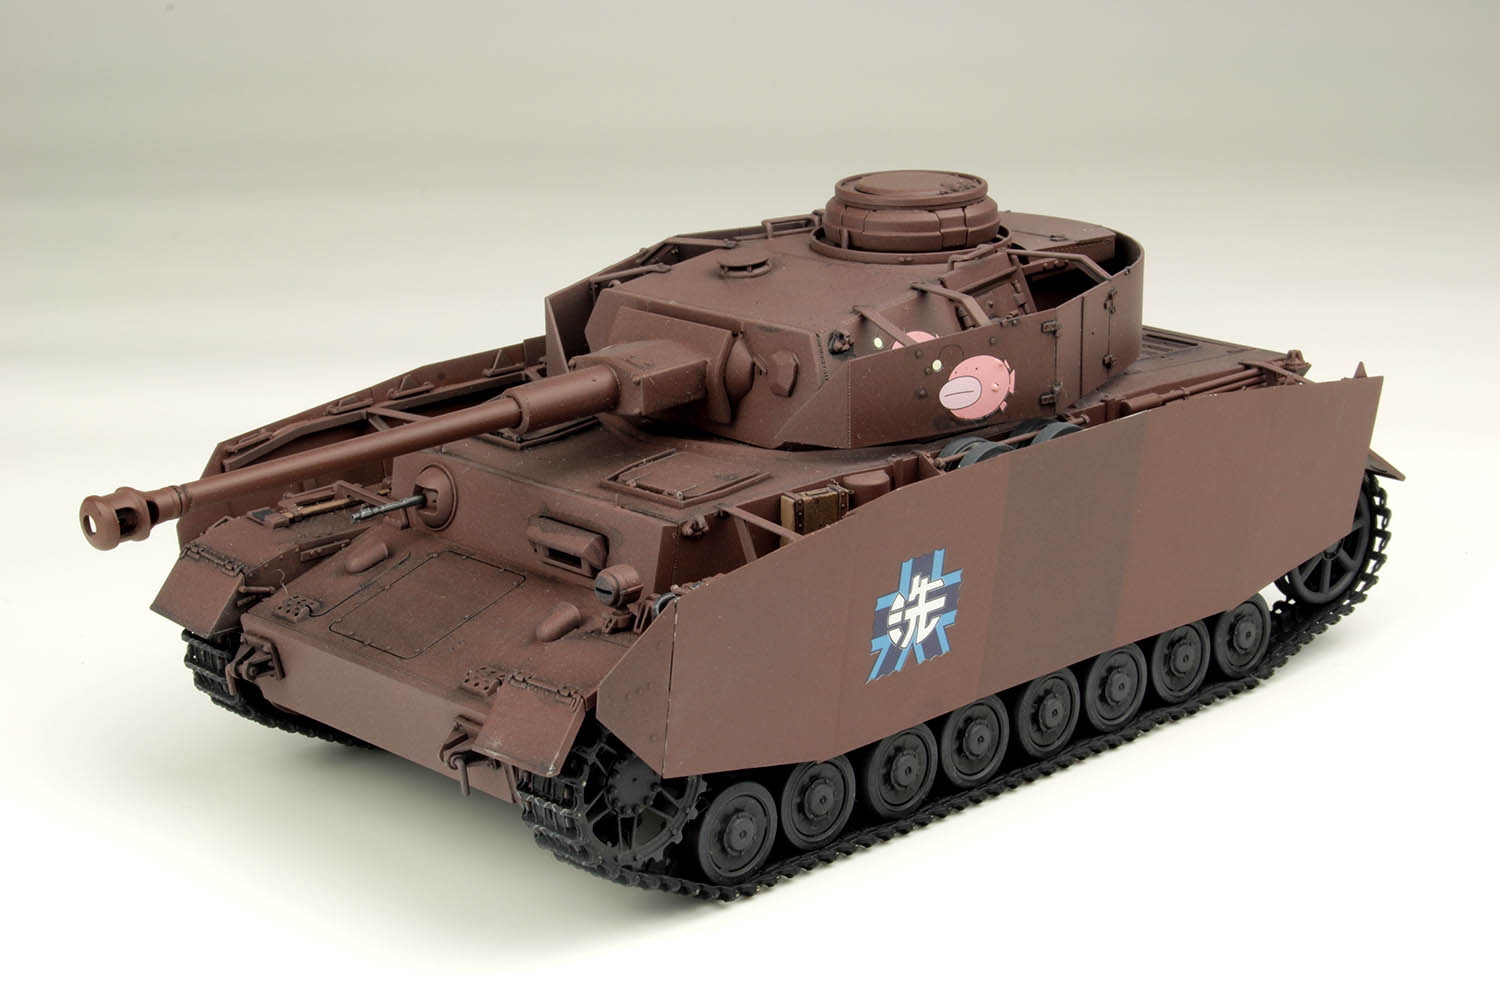 GIRLS und PANZER 1/35 Panzer Kpfw IV Ausf. D (H ver.) TEAM ANKOU